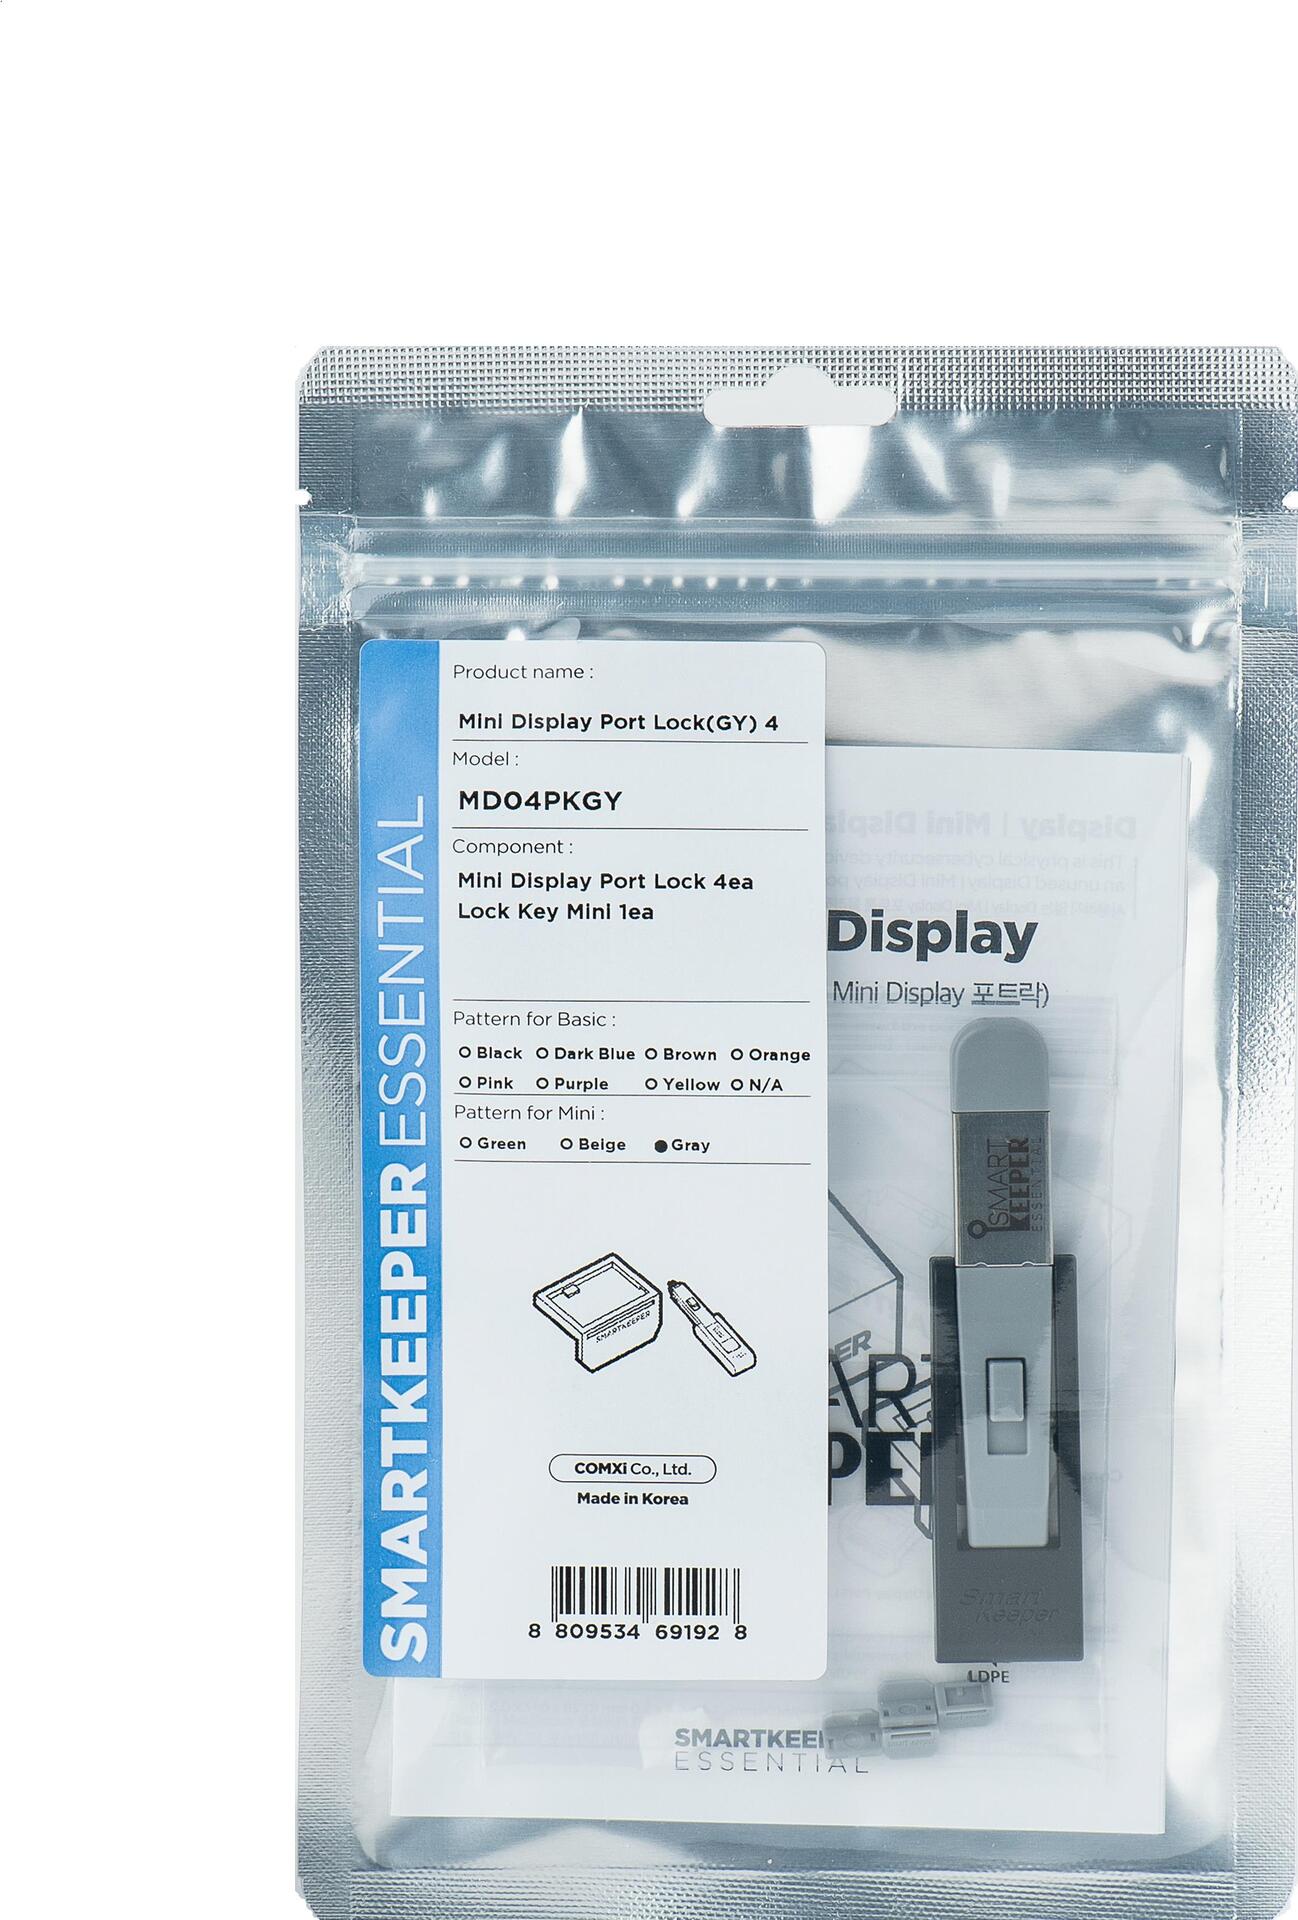 Smartkeeper MD04PKGY Schnittstellenblockierung Schnittstellenblockierung + Schlüssel Mini DisplayPort Grau Kunststoff 1 Stück(e) (MD04PKGY)